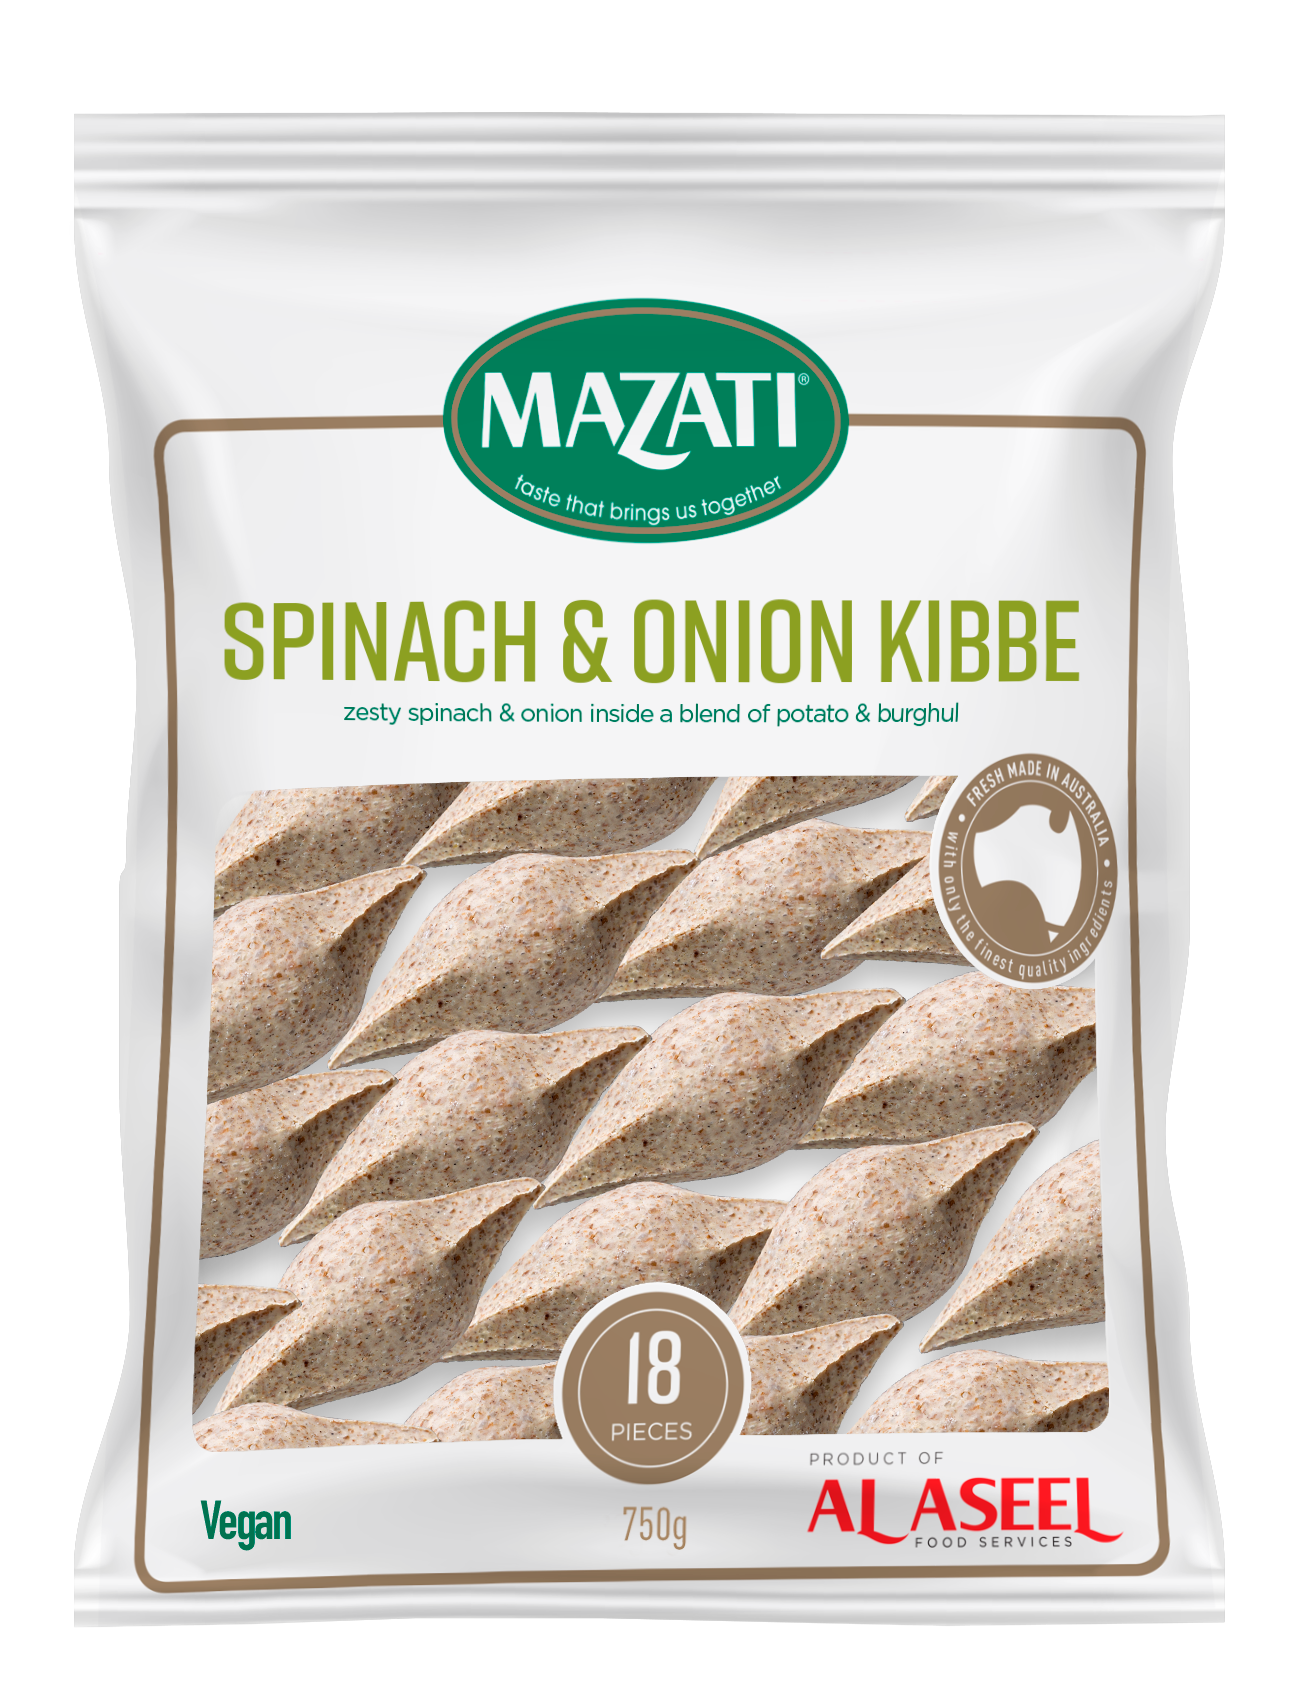 Spinach & Onion Kibbe